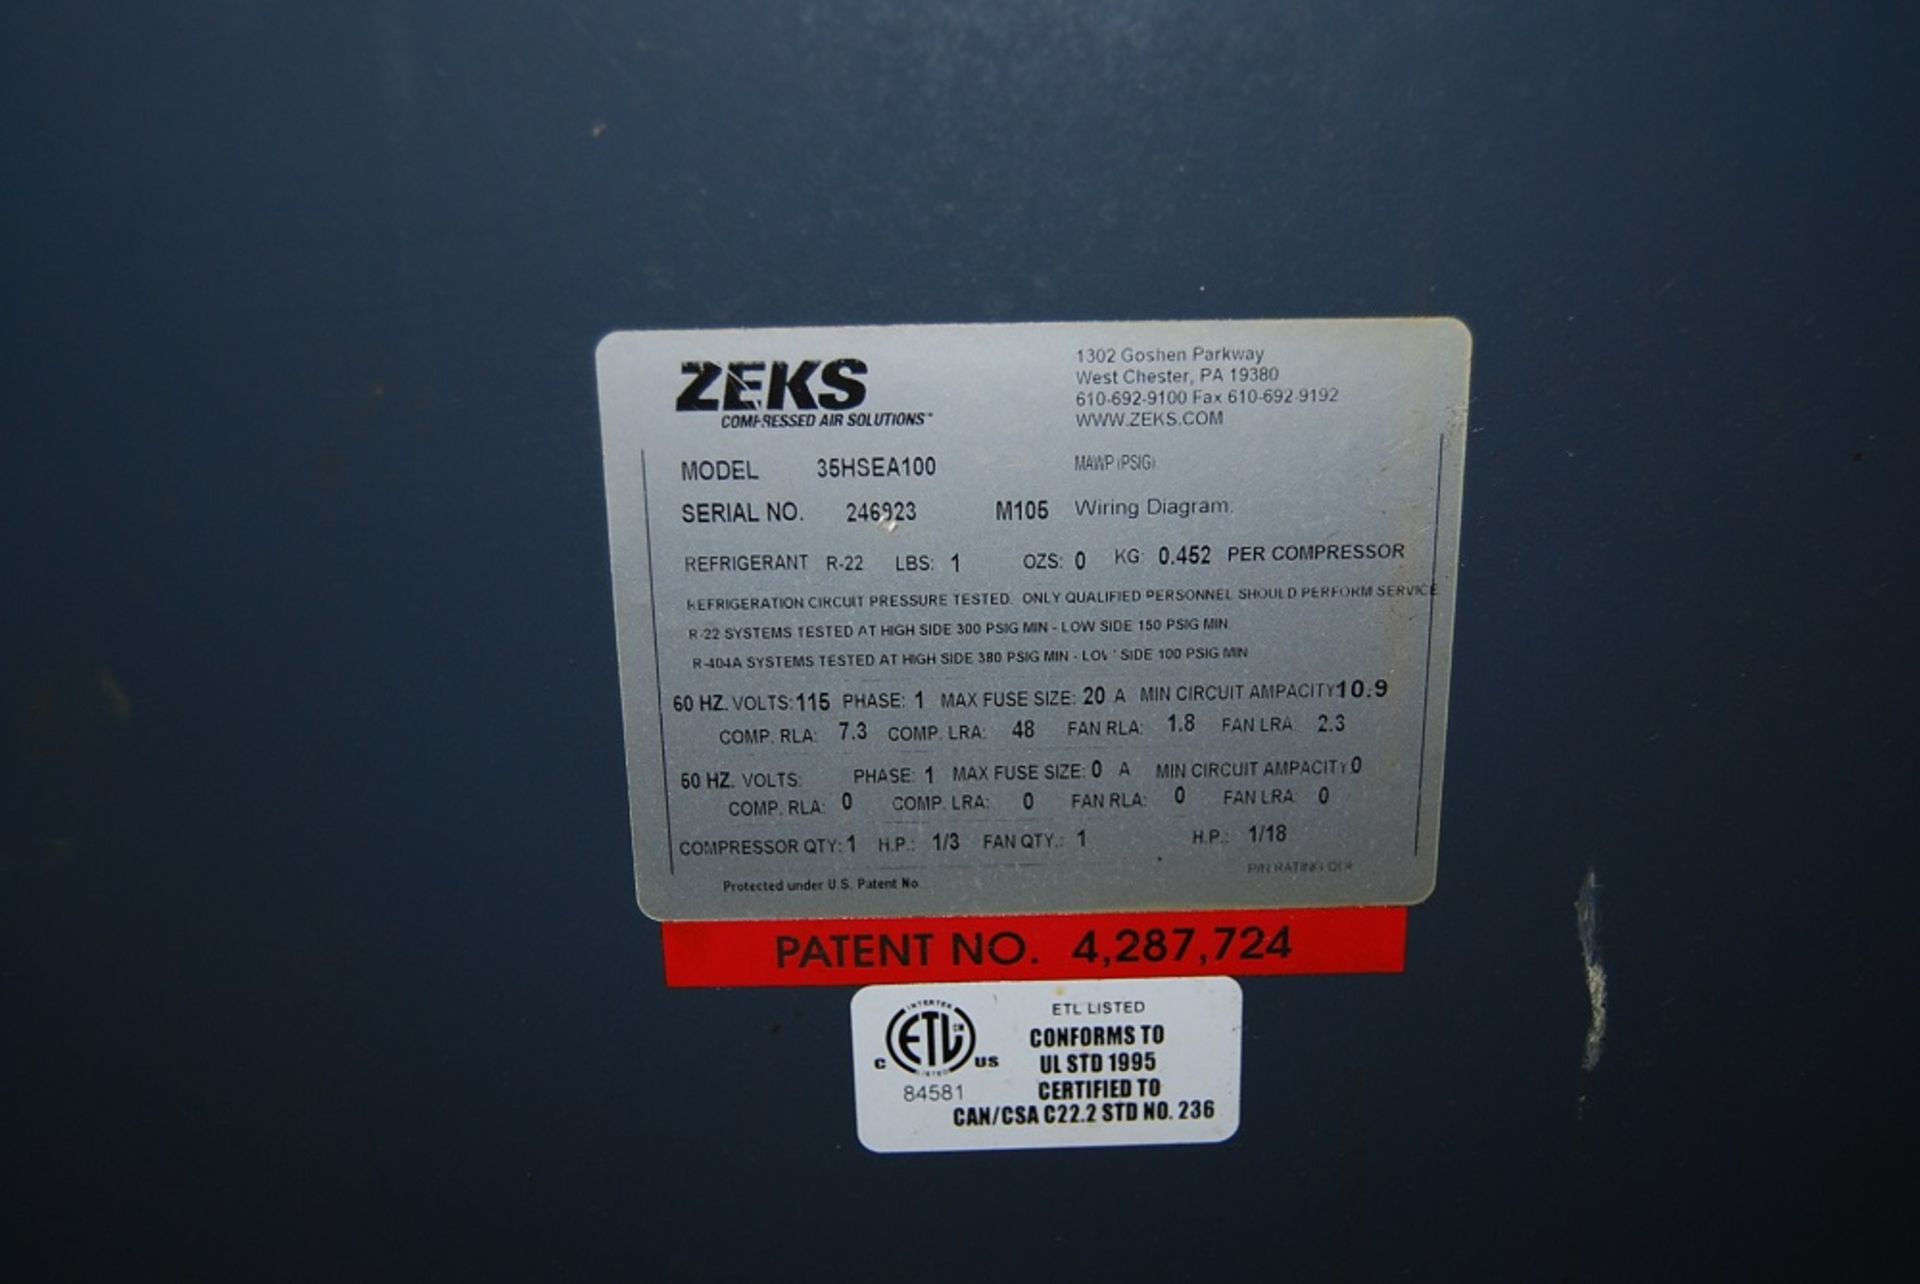 ZEKS Air Dryer, Model: 35HSEA100, SN: 246933, Foot print: 44" x 44" x 38" tall - Image 6 of 6